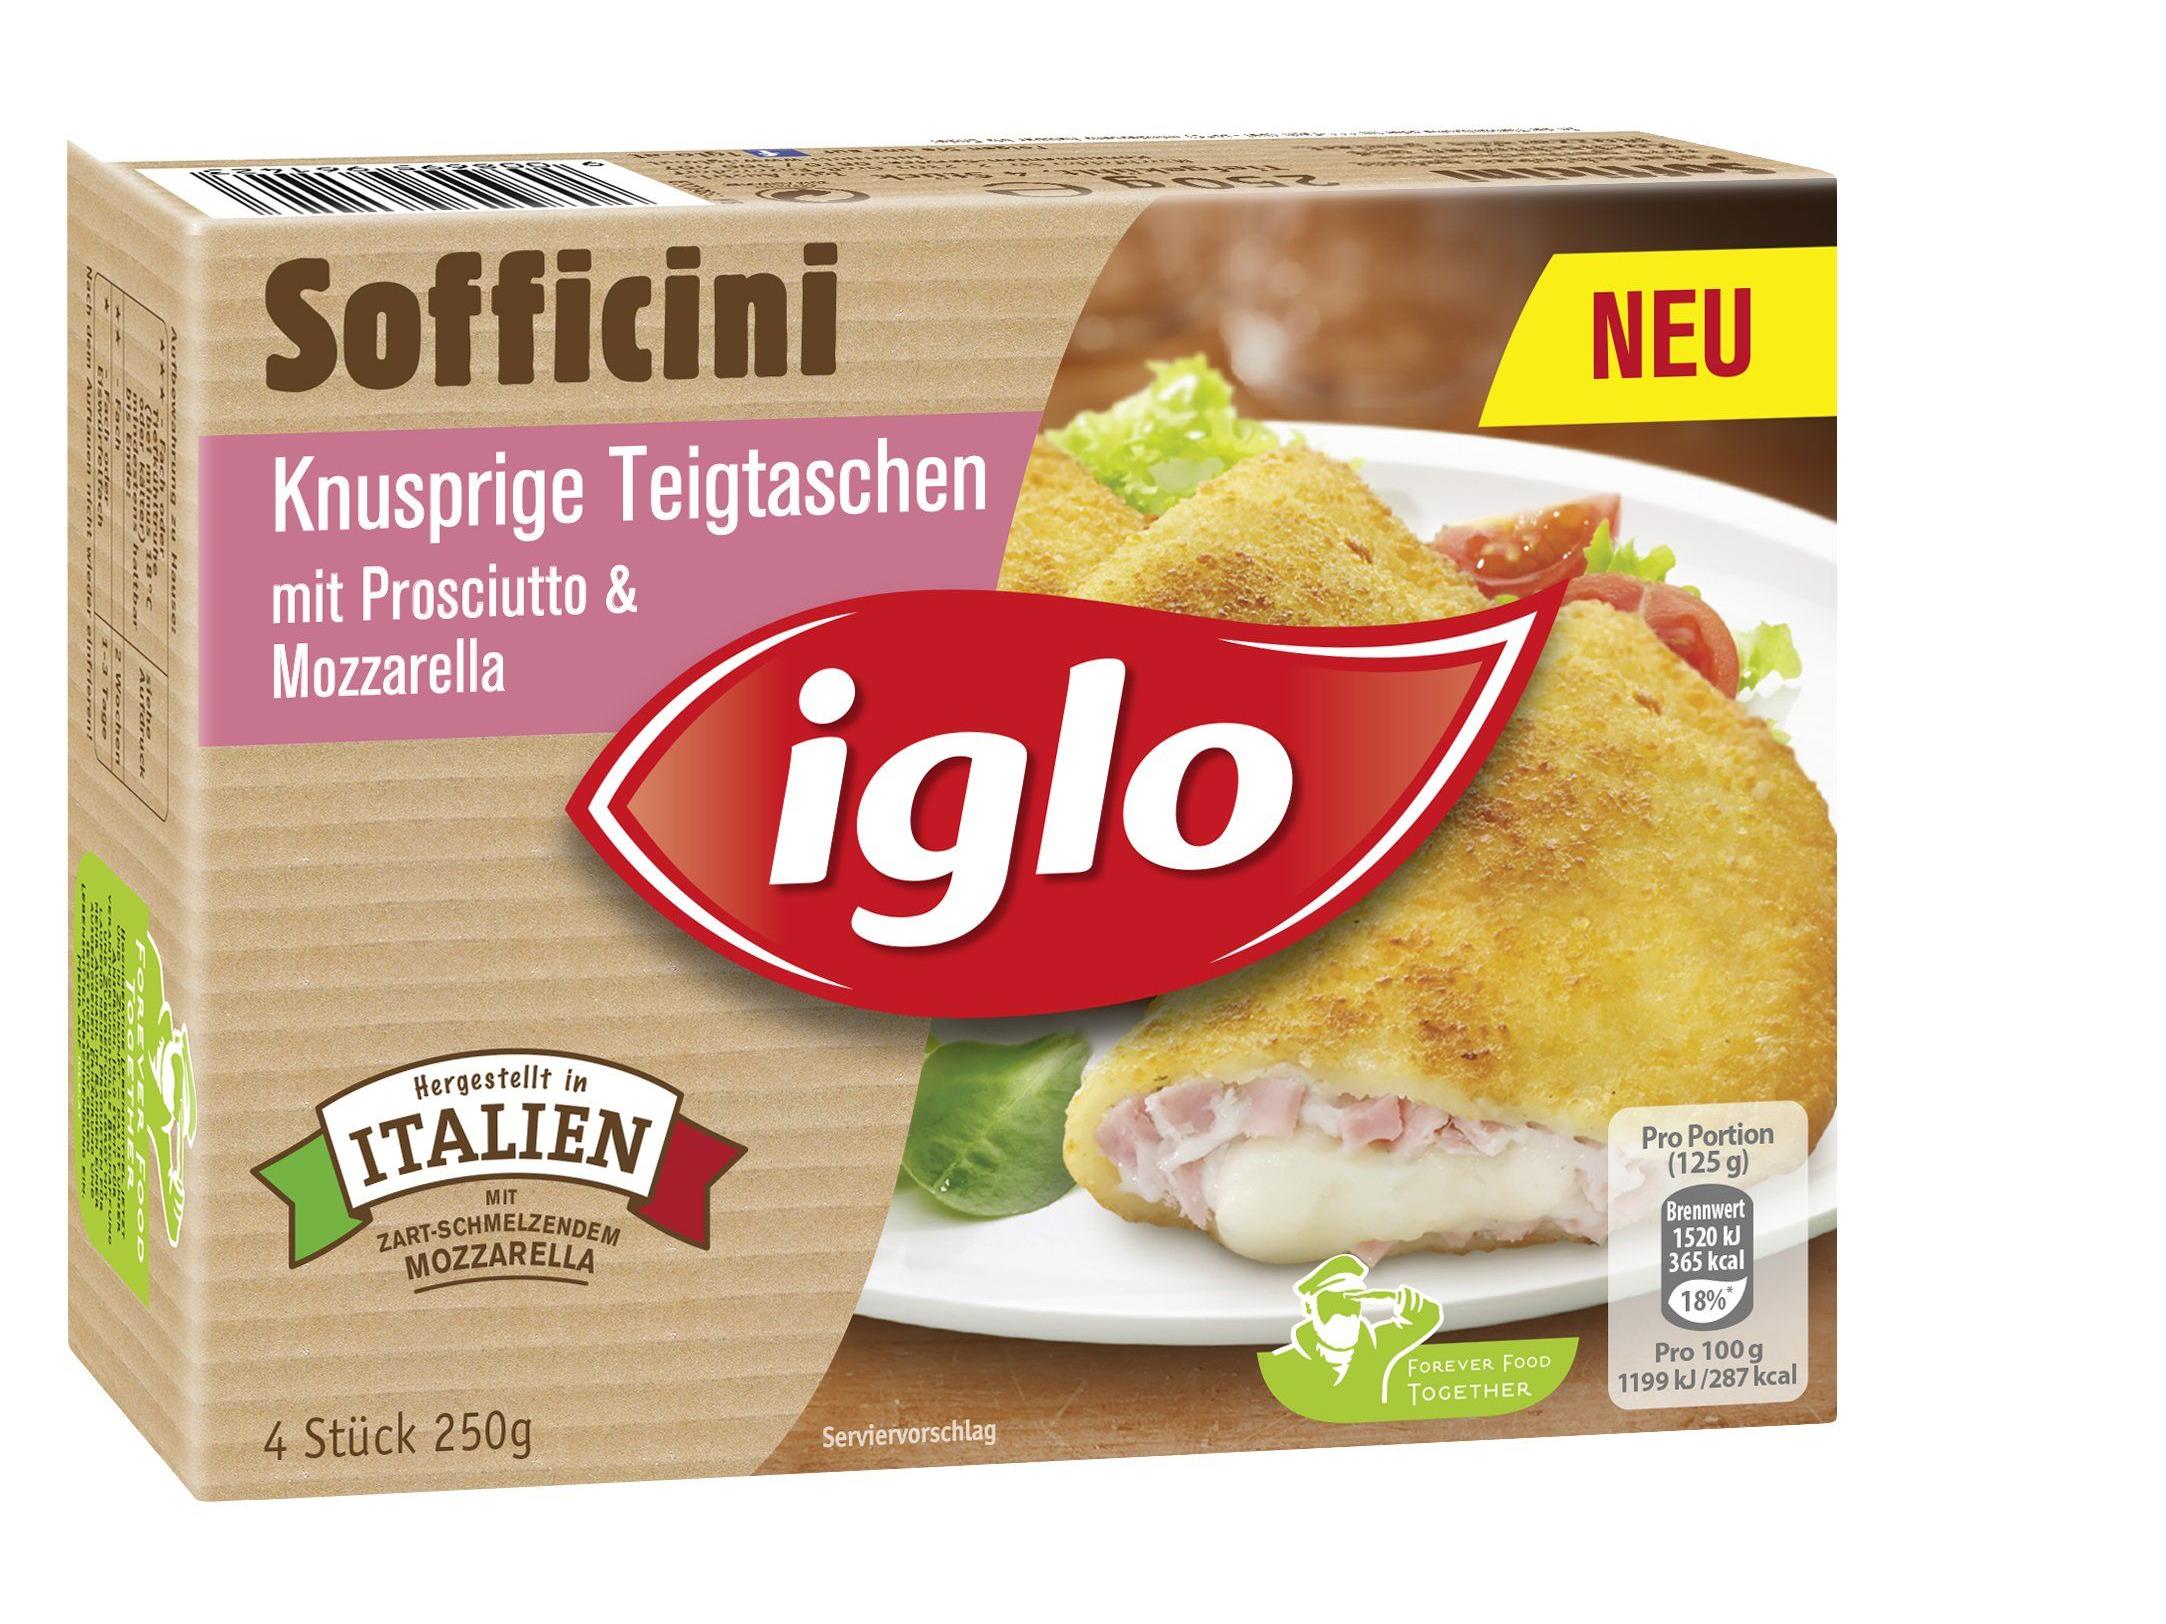 Drei Iglo Sofficini-Feinschmeckerpakete gewinnen!